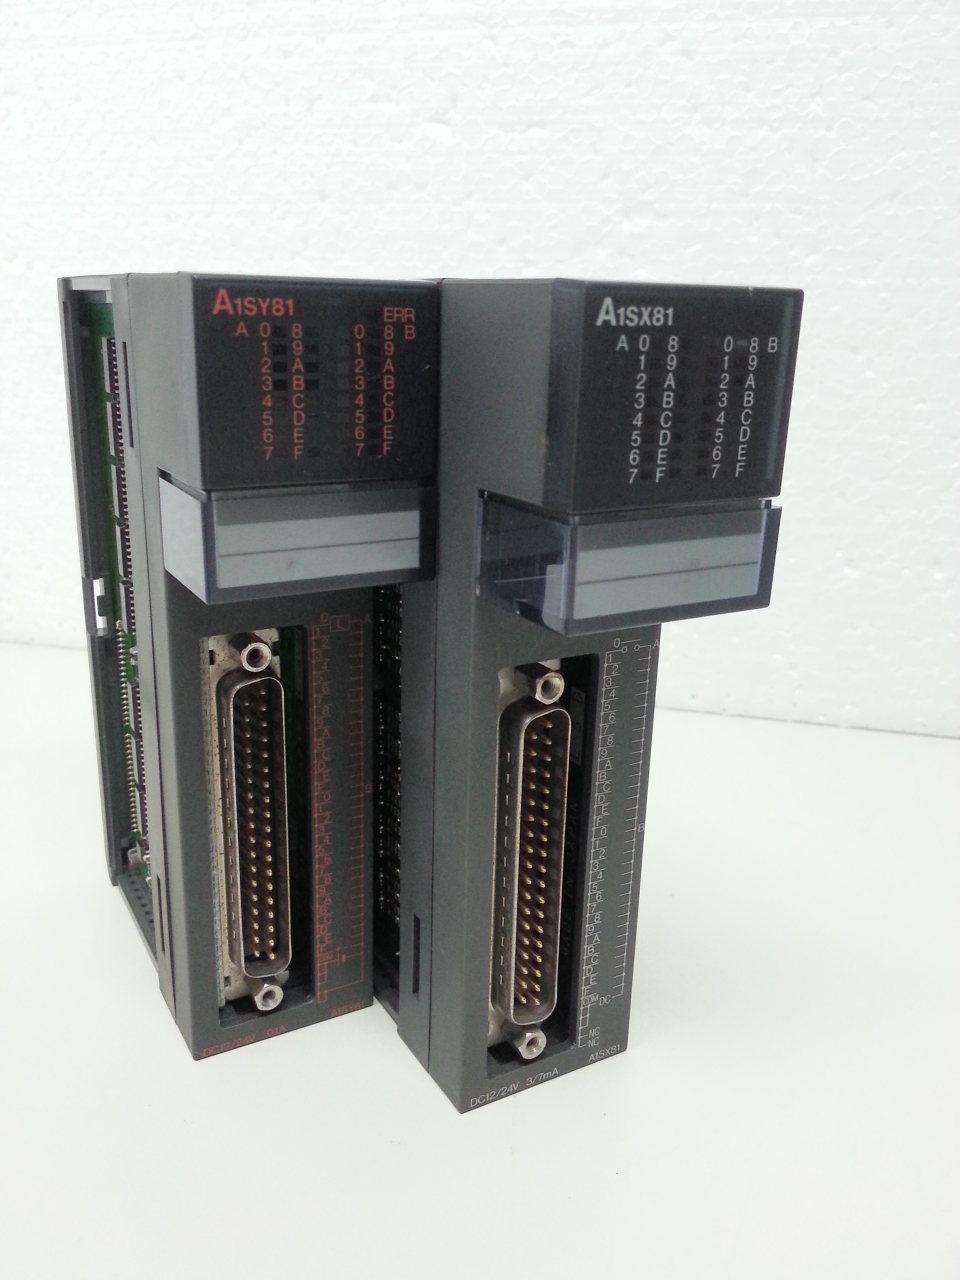 A1SX81 melsec input module